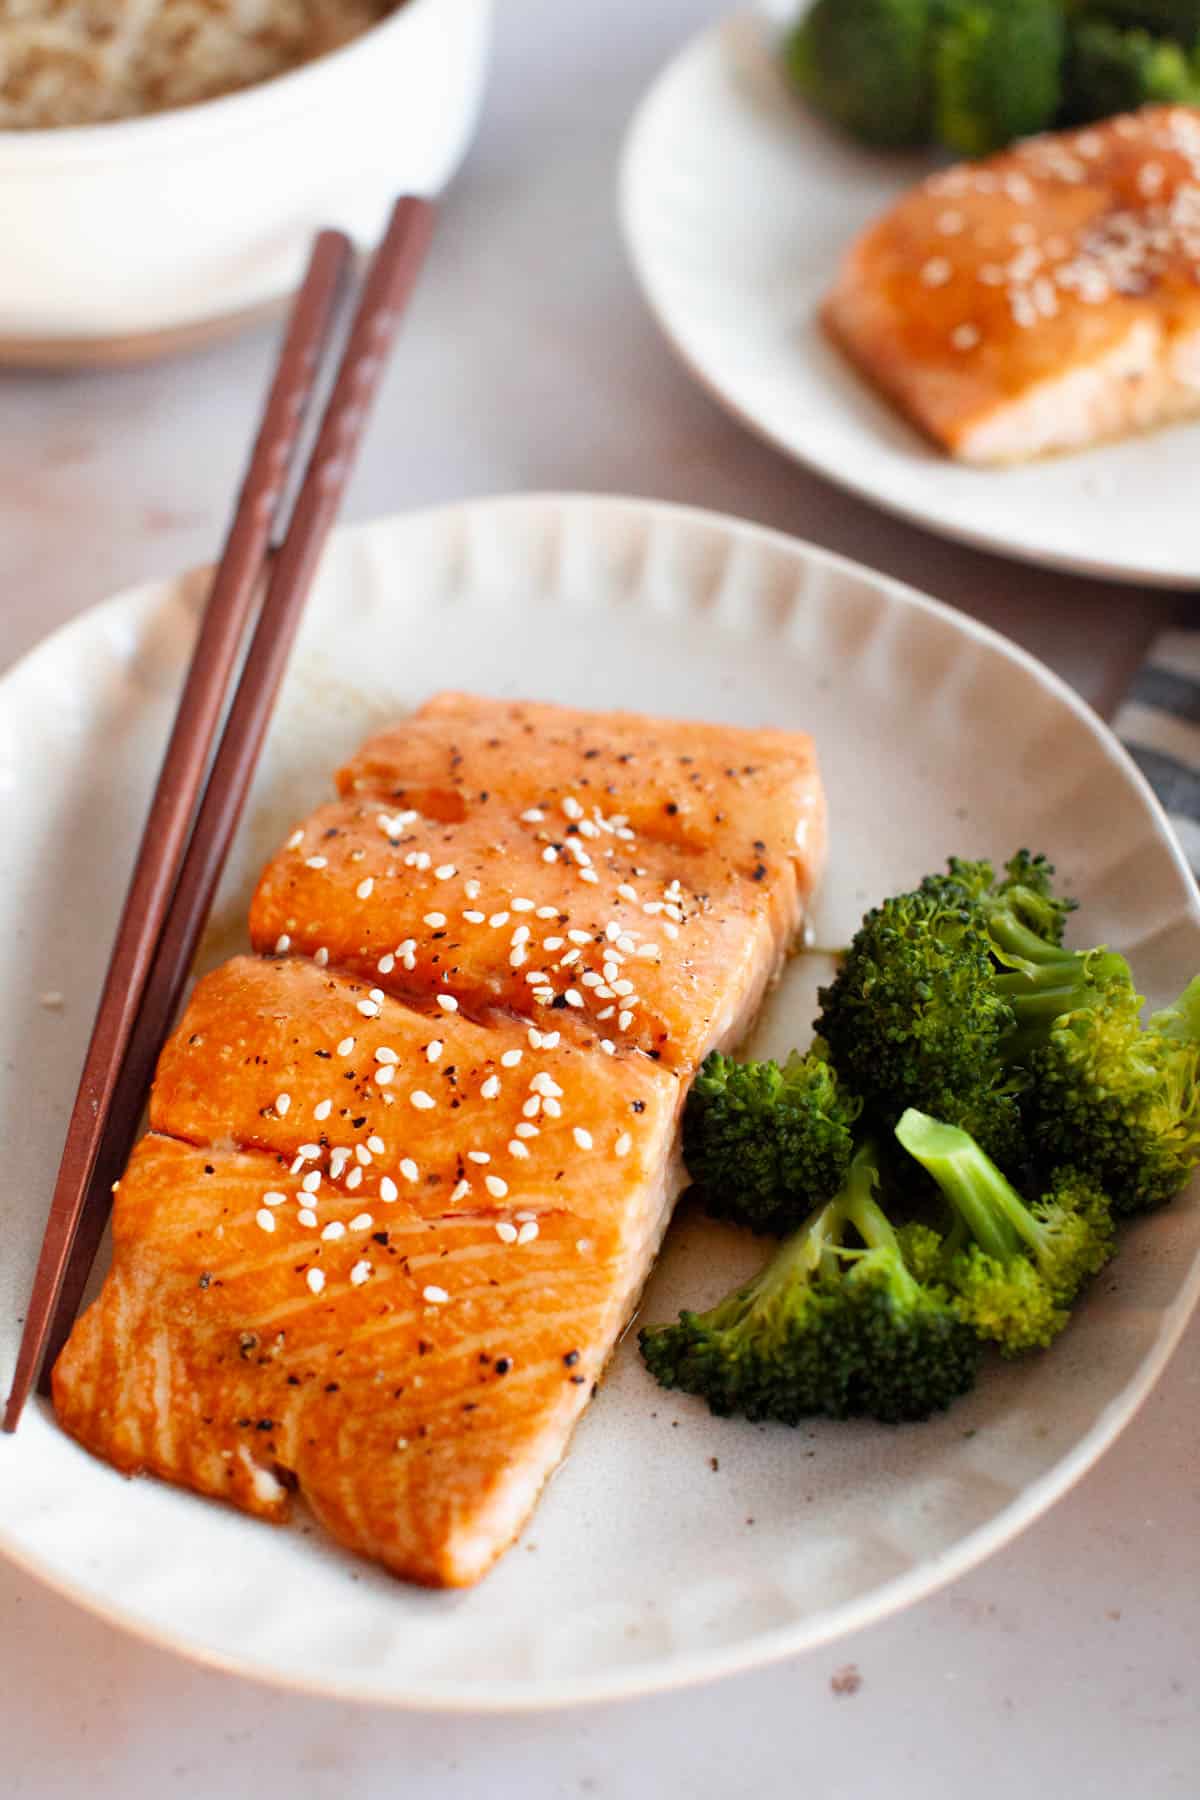 Teriyaki-glazed salmon with broccoli on a plate.